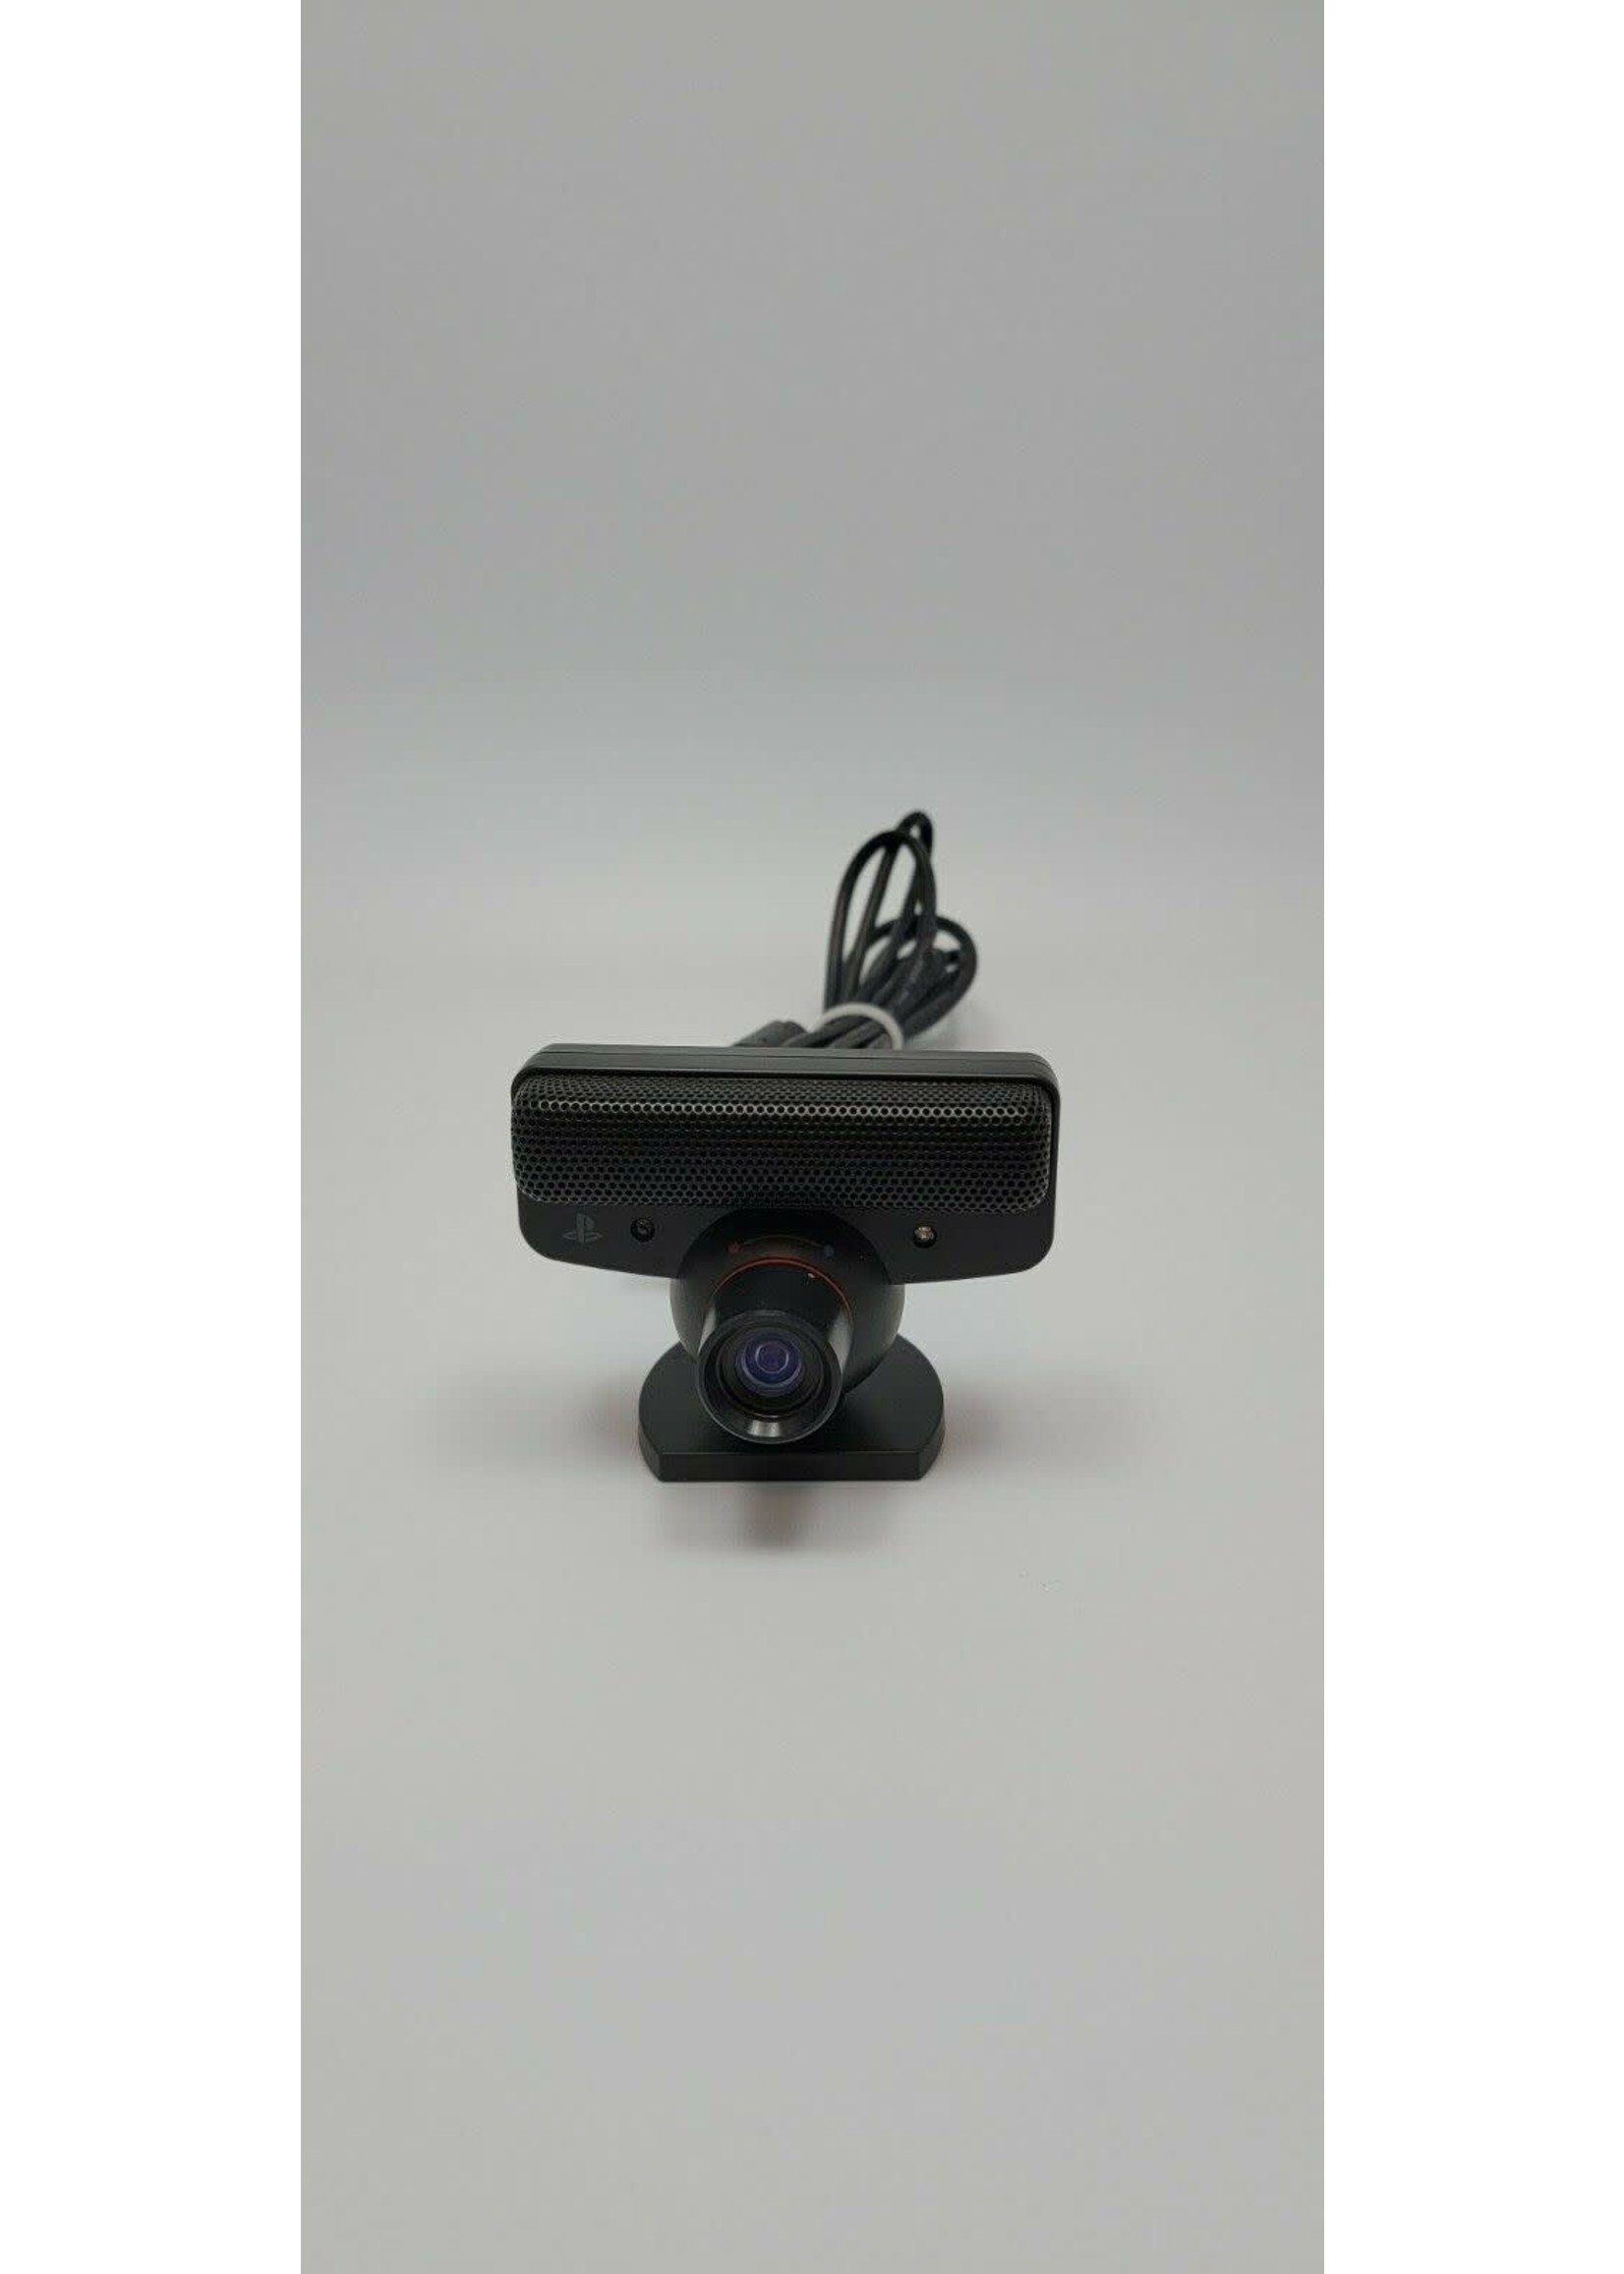 Sony PlayStation 3 Eye Webcam USB Camera PS3